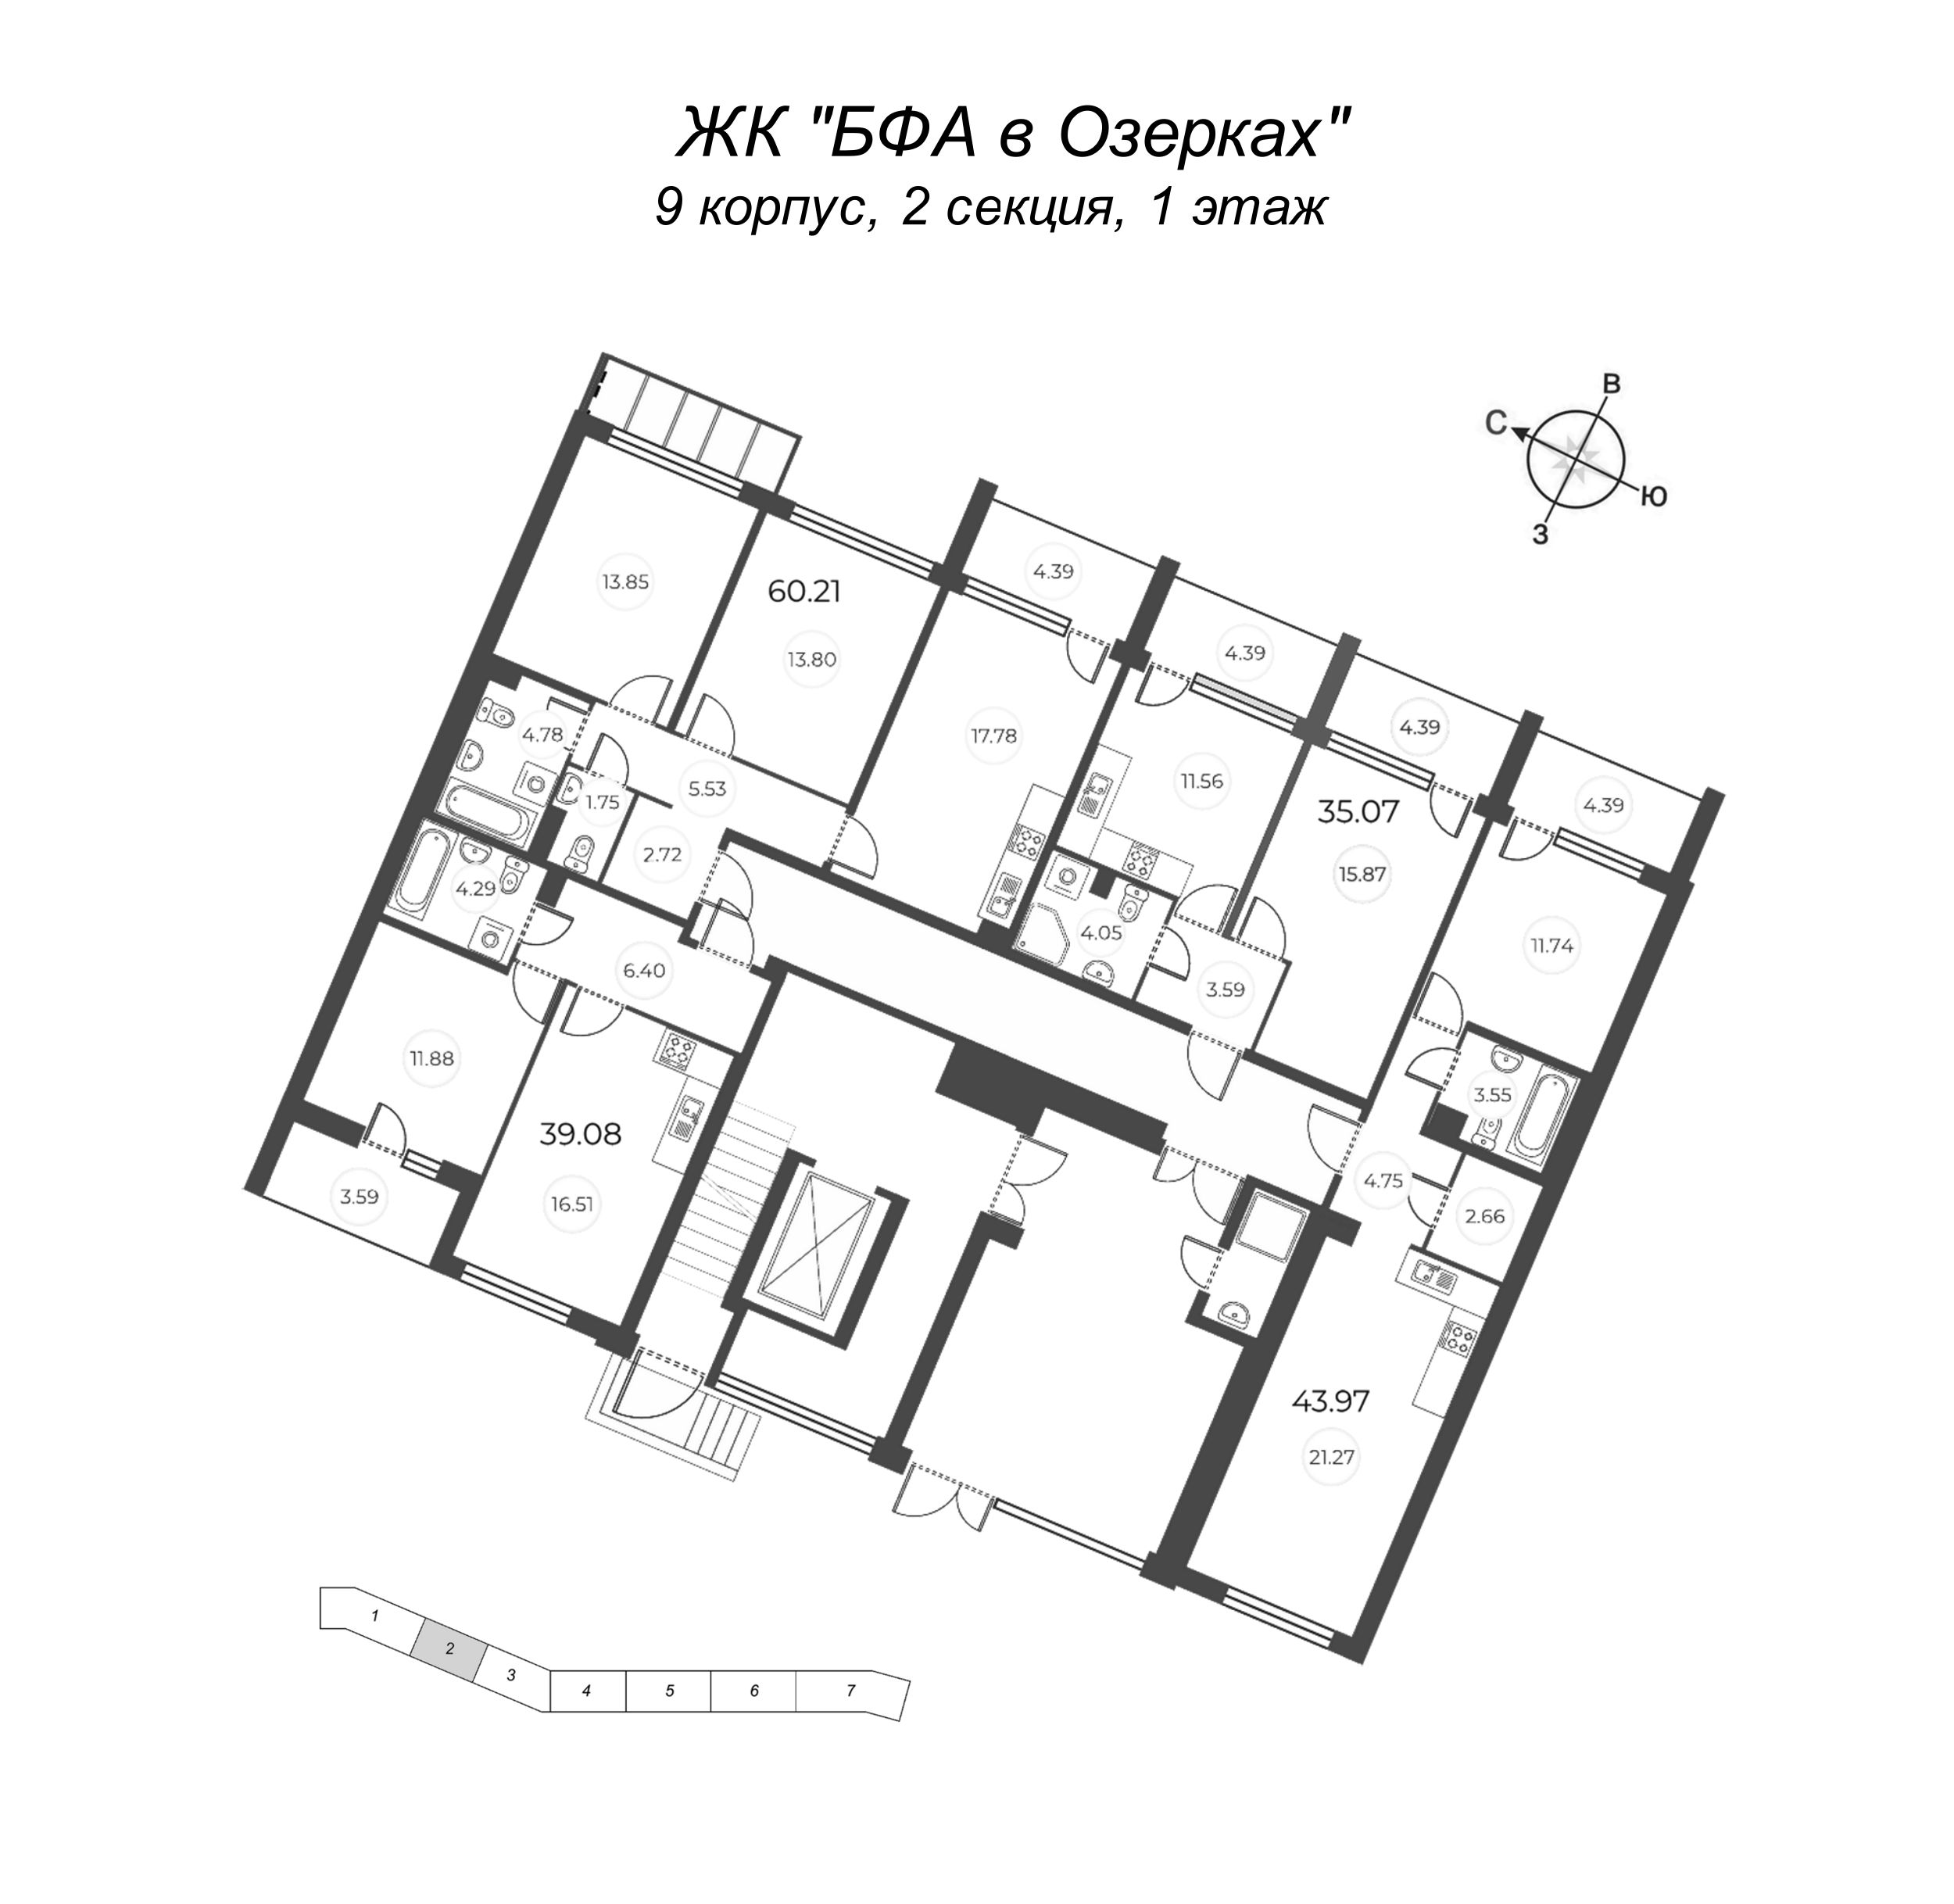 2-комнатная (Евро) квартира, 40.88 м² в ЖК "БФА в Озерках" - планировка этажа